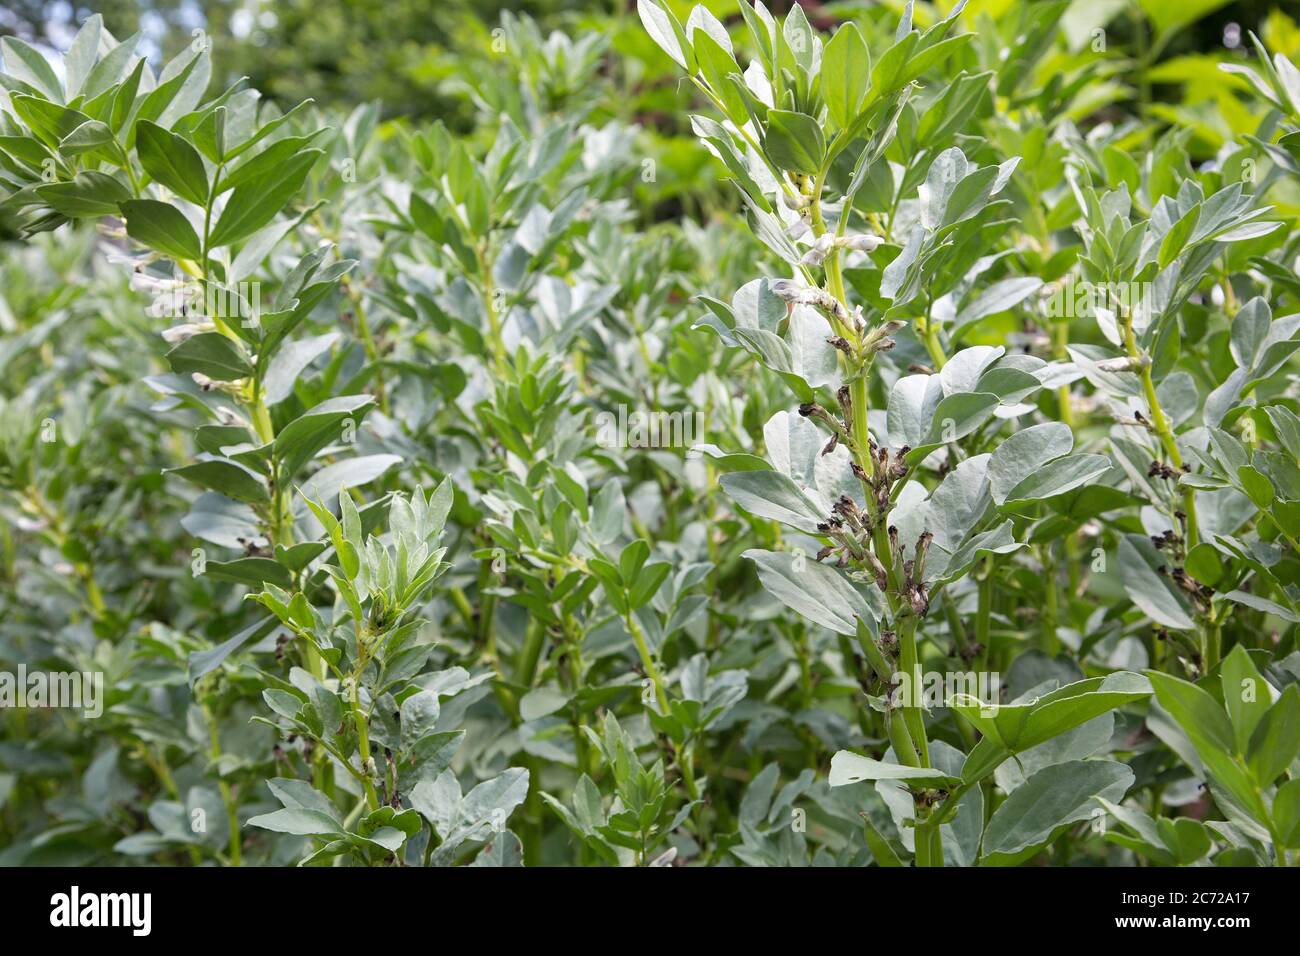 Field bean or broad bean (Vicia faba) in the vegetable garden Stock Photo